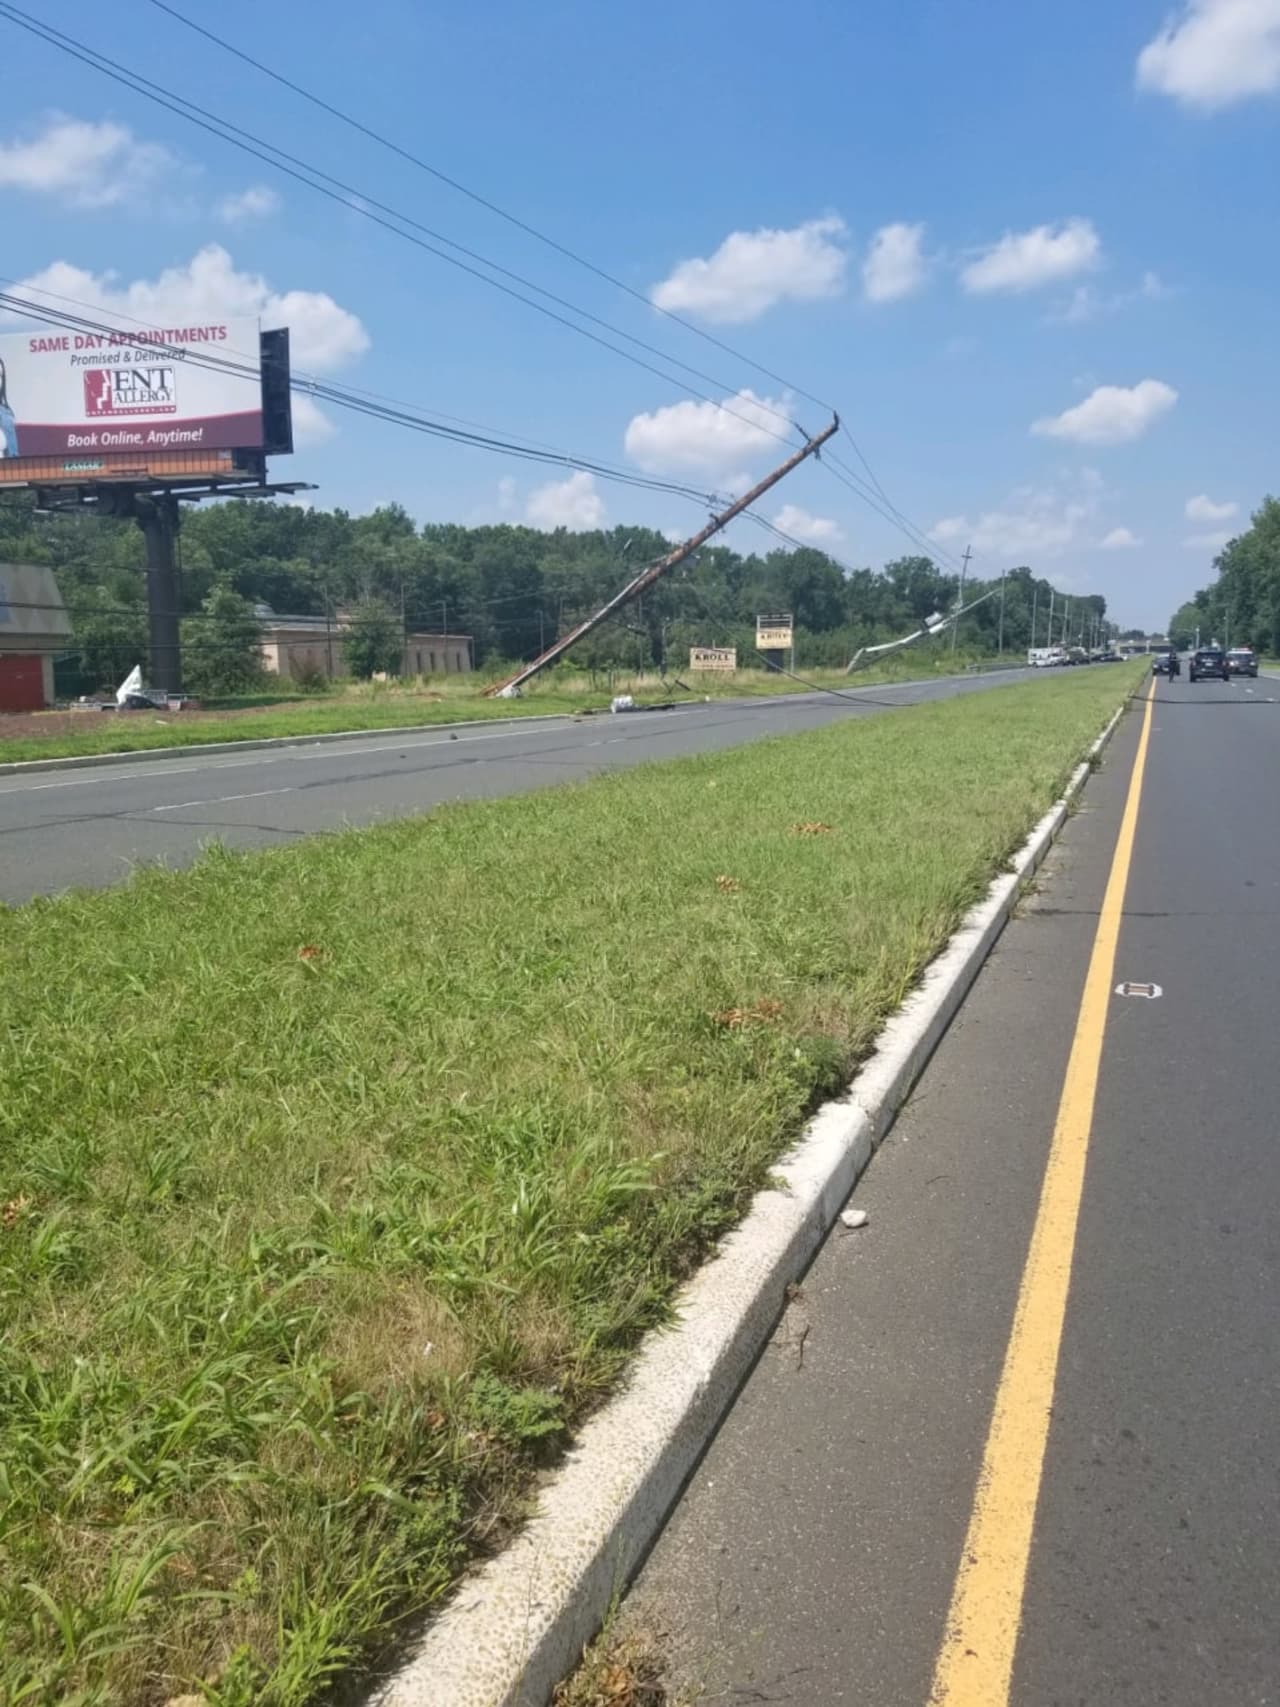 Fatal crash scene along Route 9 in Marlboro Township